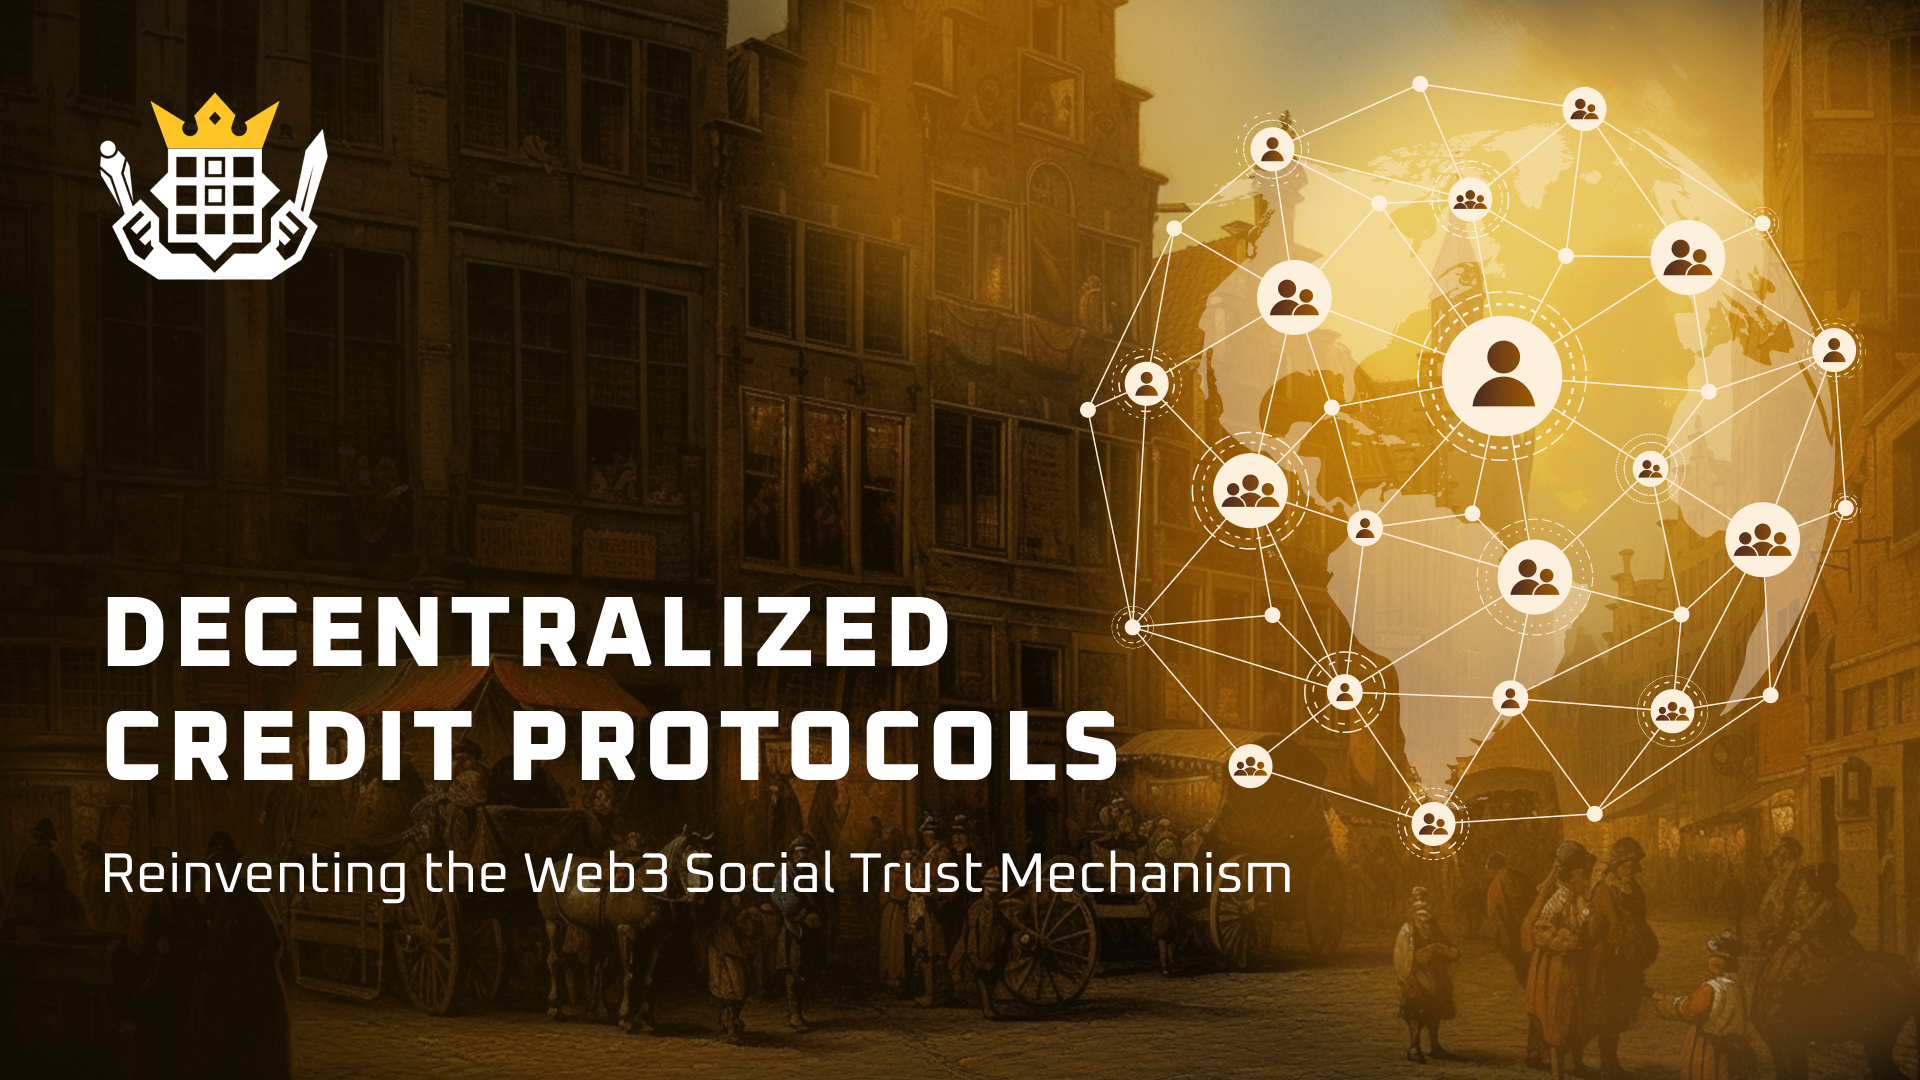 KingU: Decentralized Credit Protocol Reshapes Web3 Social Trust Mechanisms